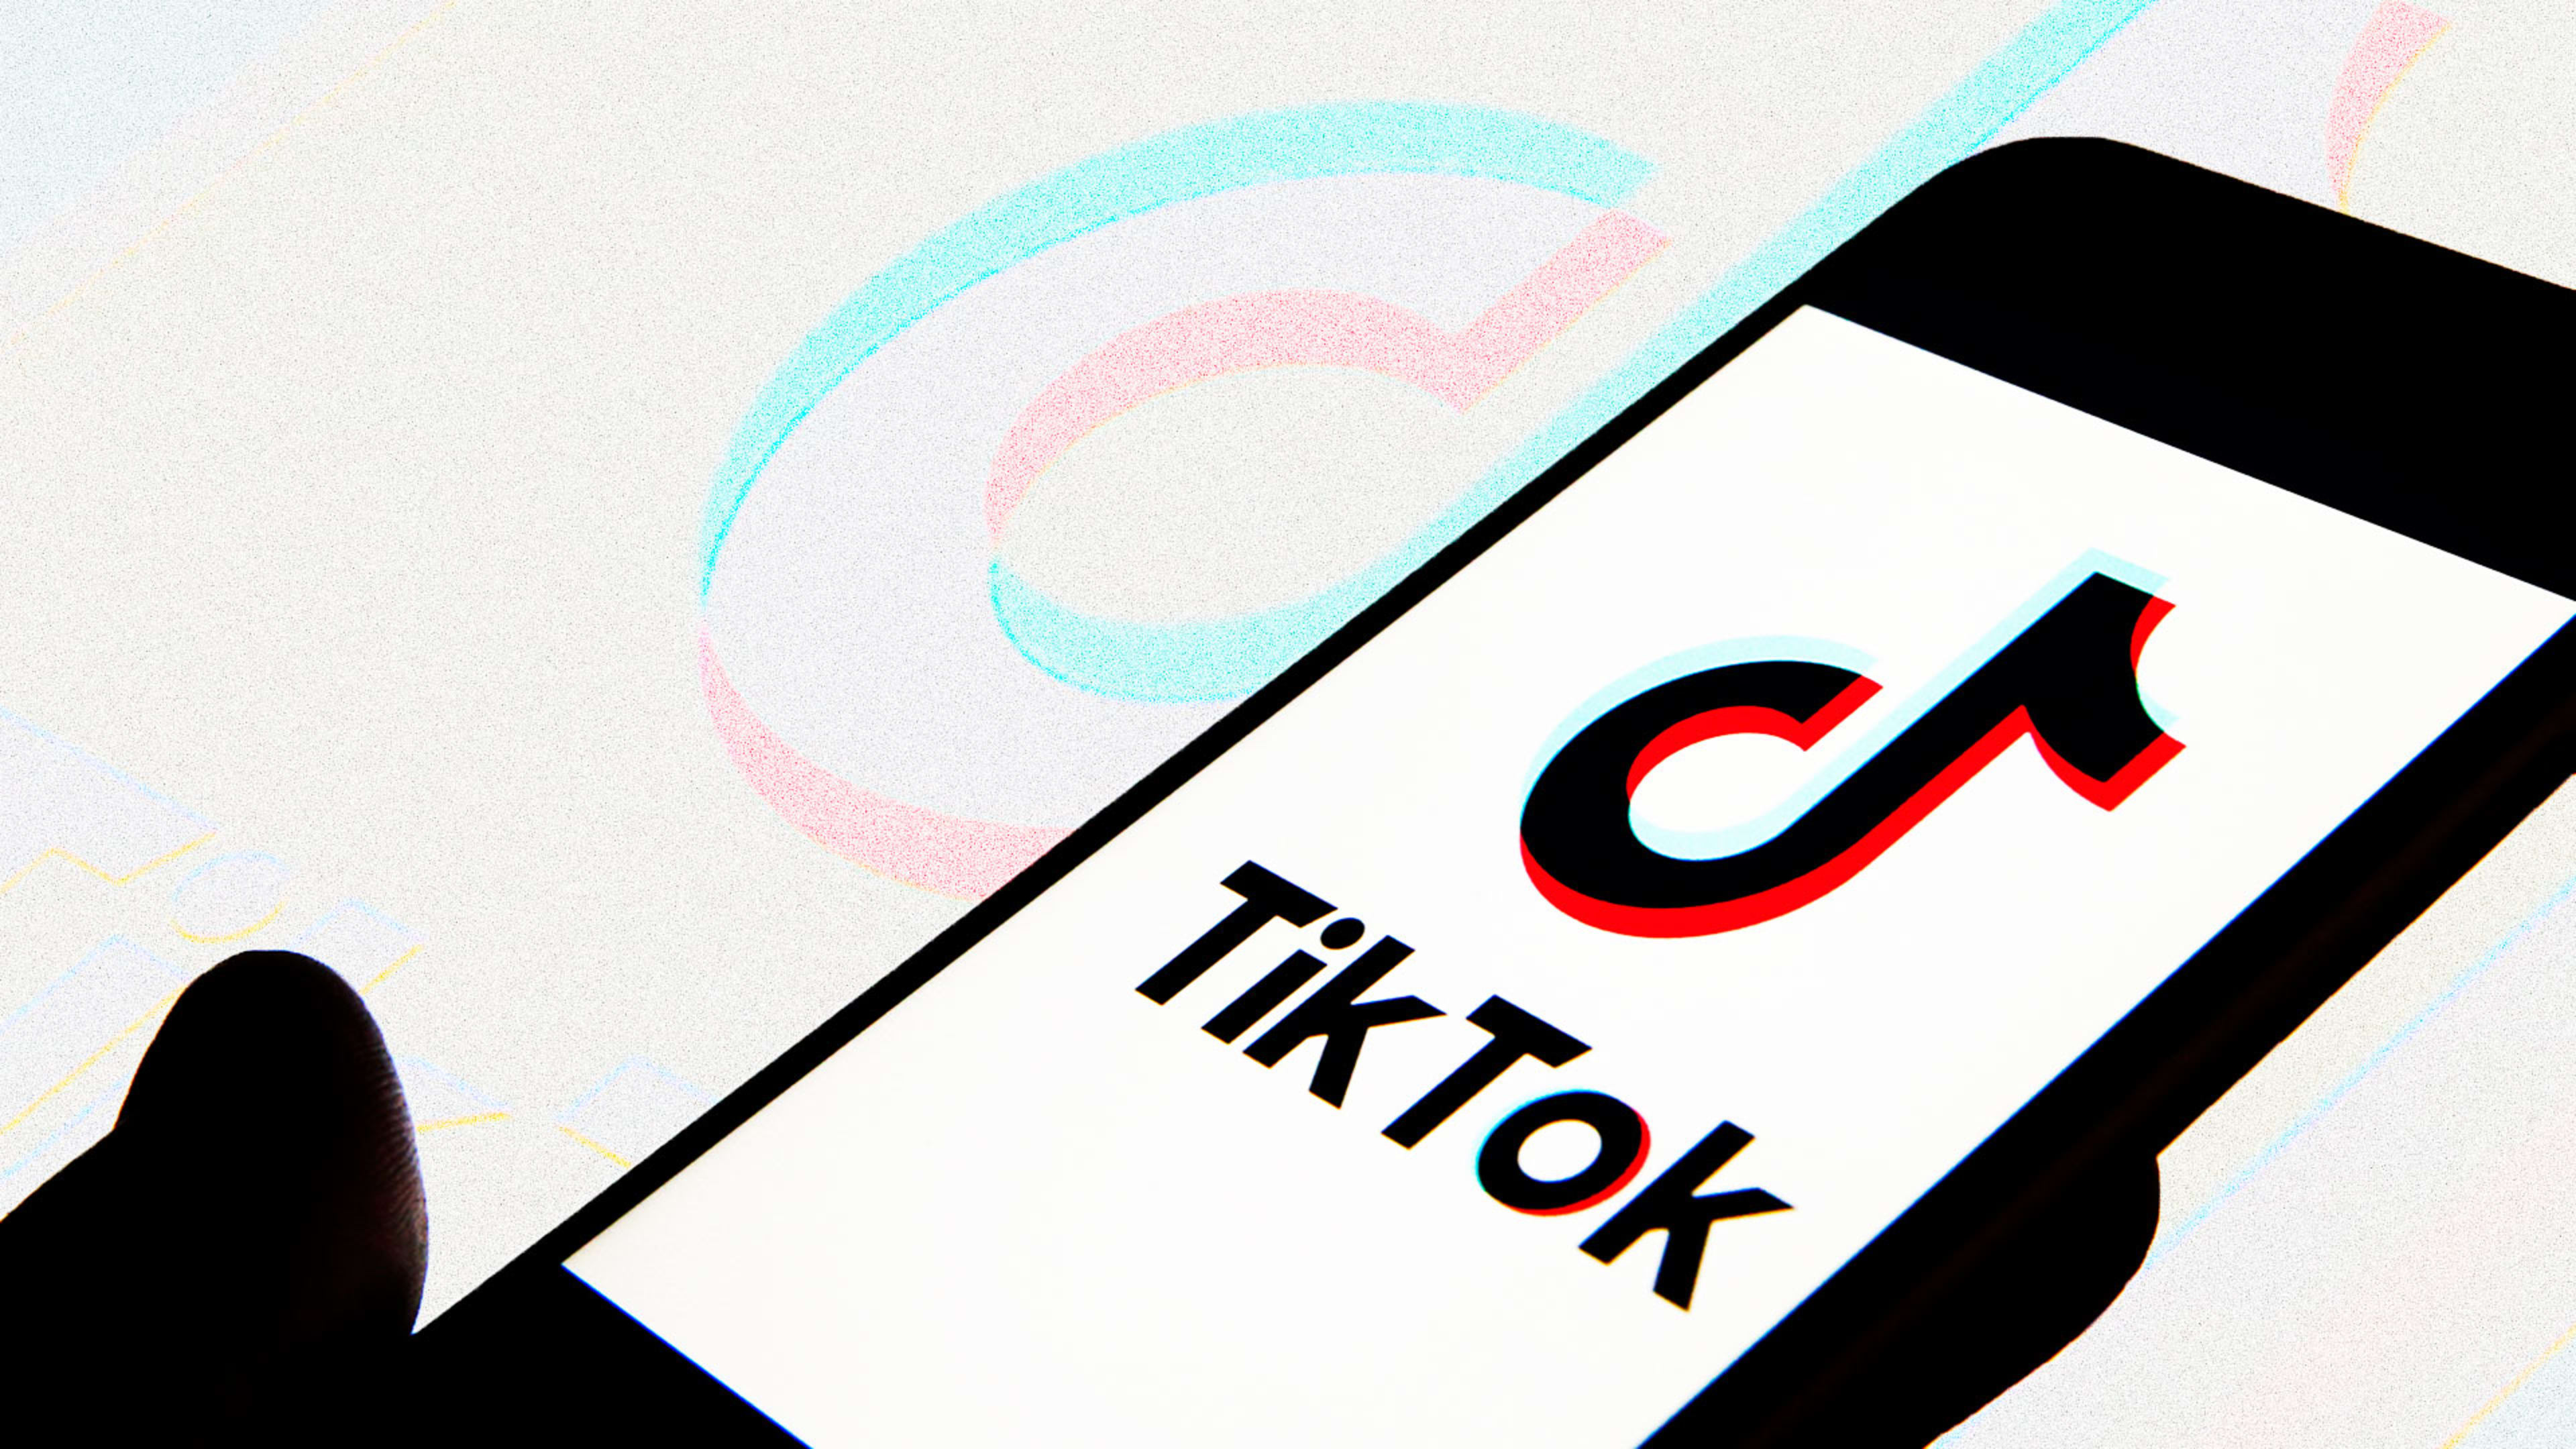 TikTok isn’t a social media platform, according to TikTok